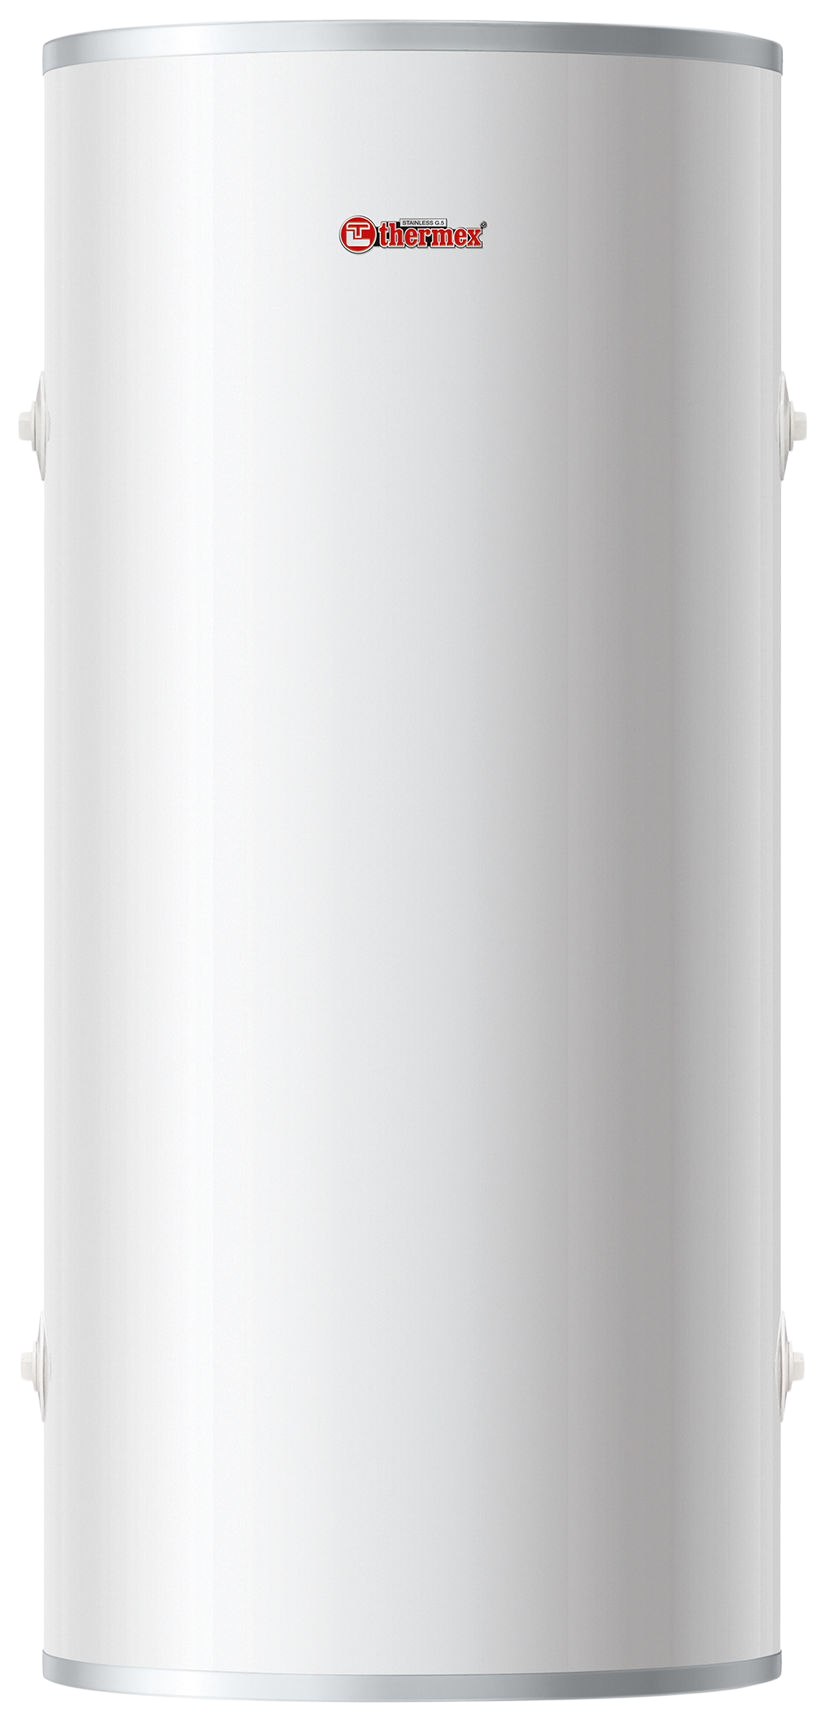 Водонагреватель накопительный THERMEX IR 200 V white водонагреватель накопительный eterna engineering fs 100 100 л white